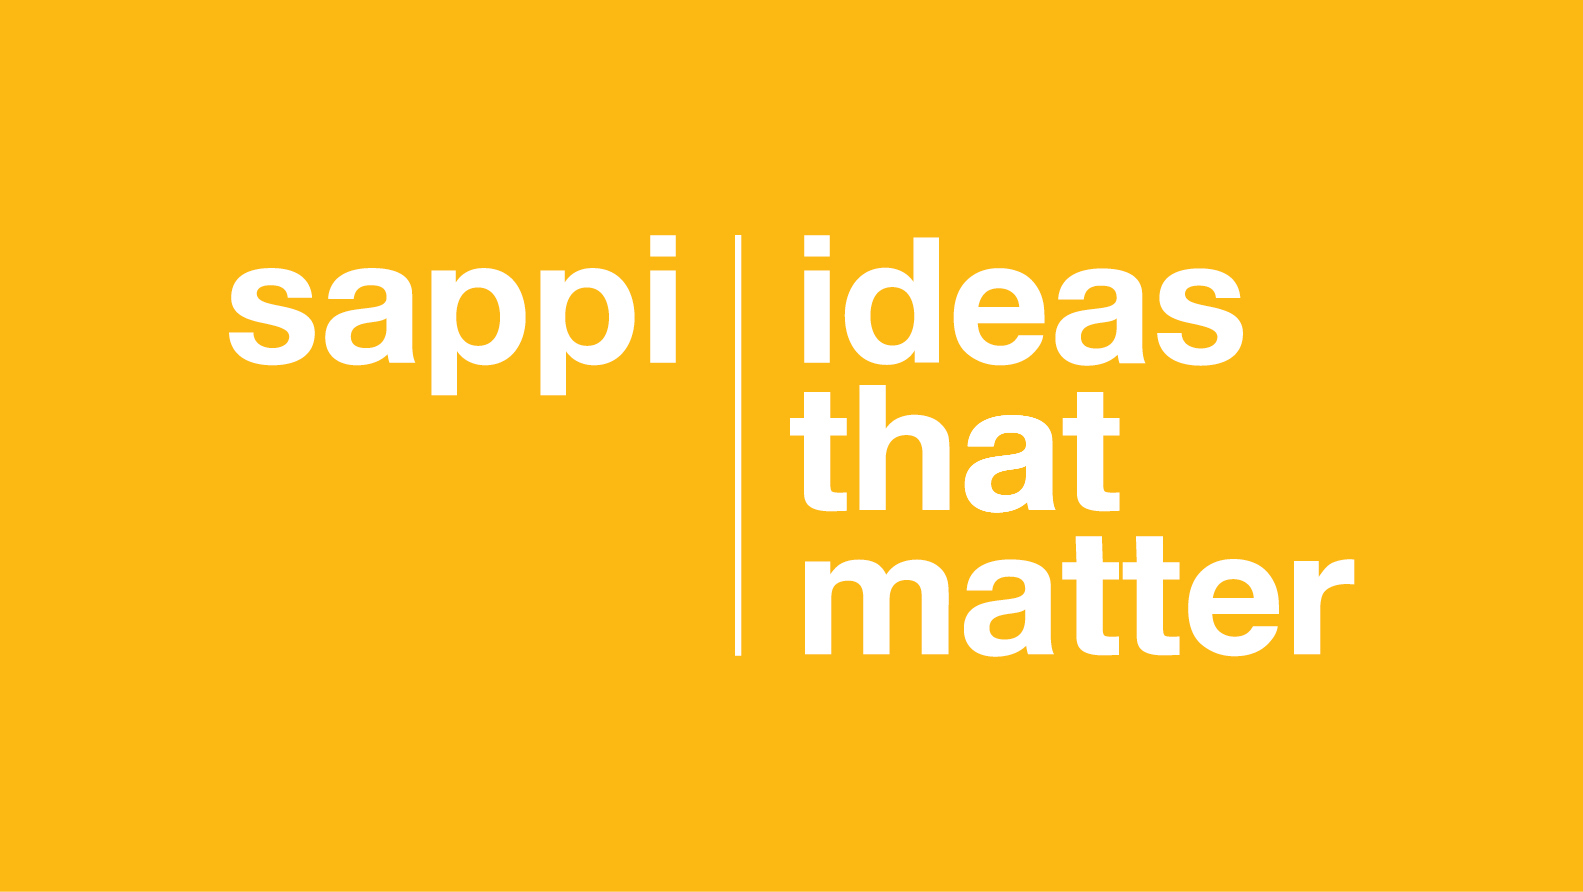 sappi ideas that matter logo